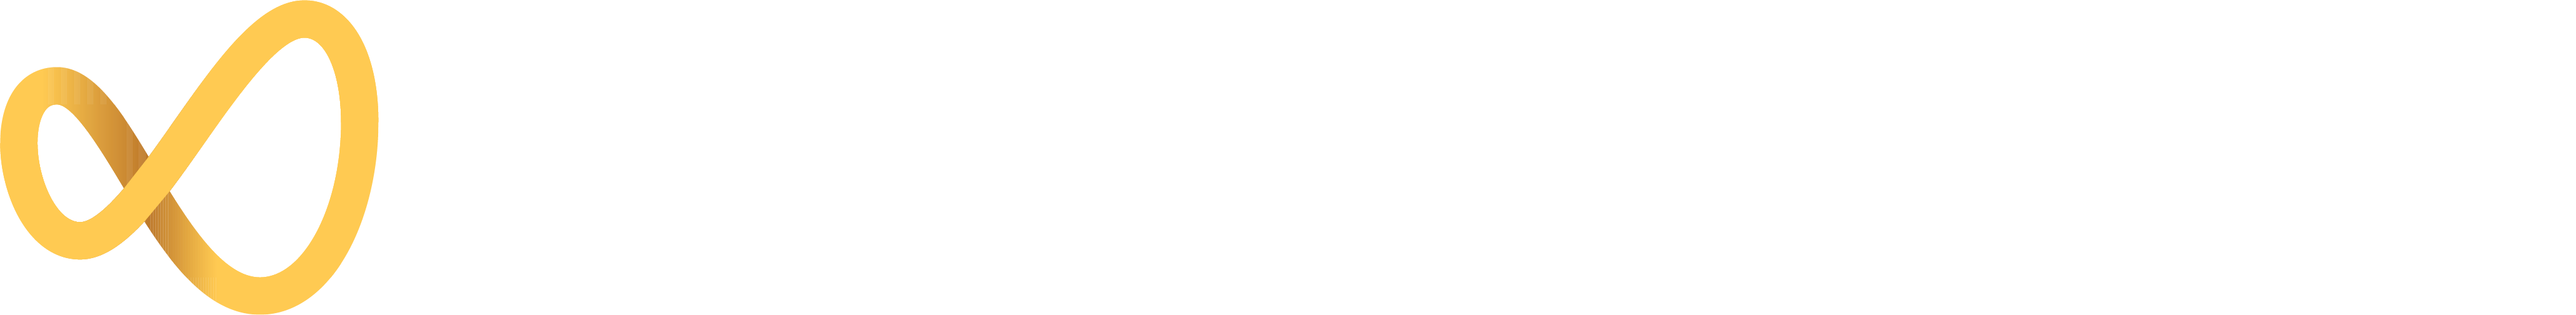 scripps research logo